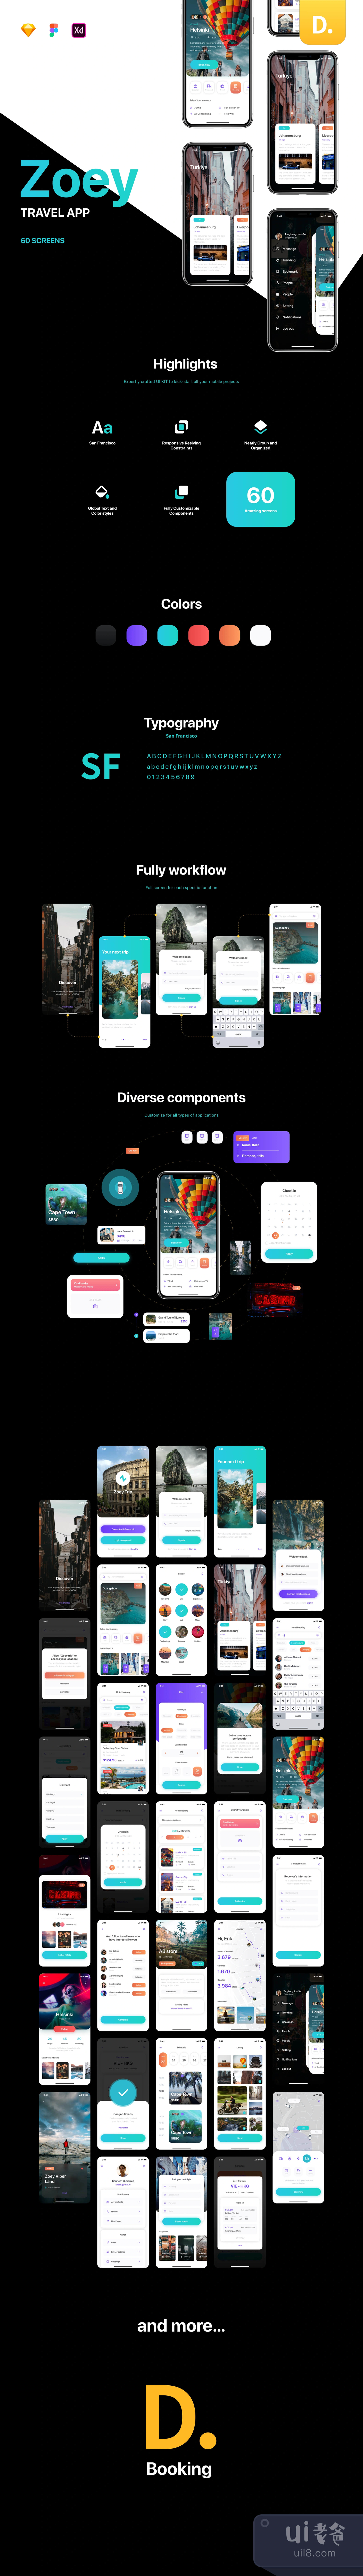 Zoey Trip - 旅游应用UI包 (Zoey Trip - Travel App UI Kit插图